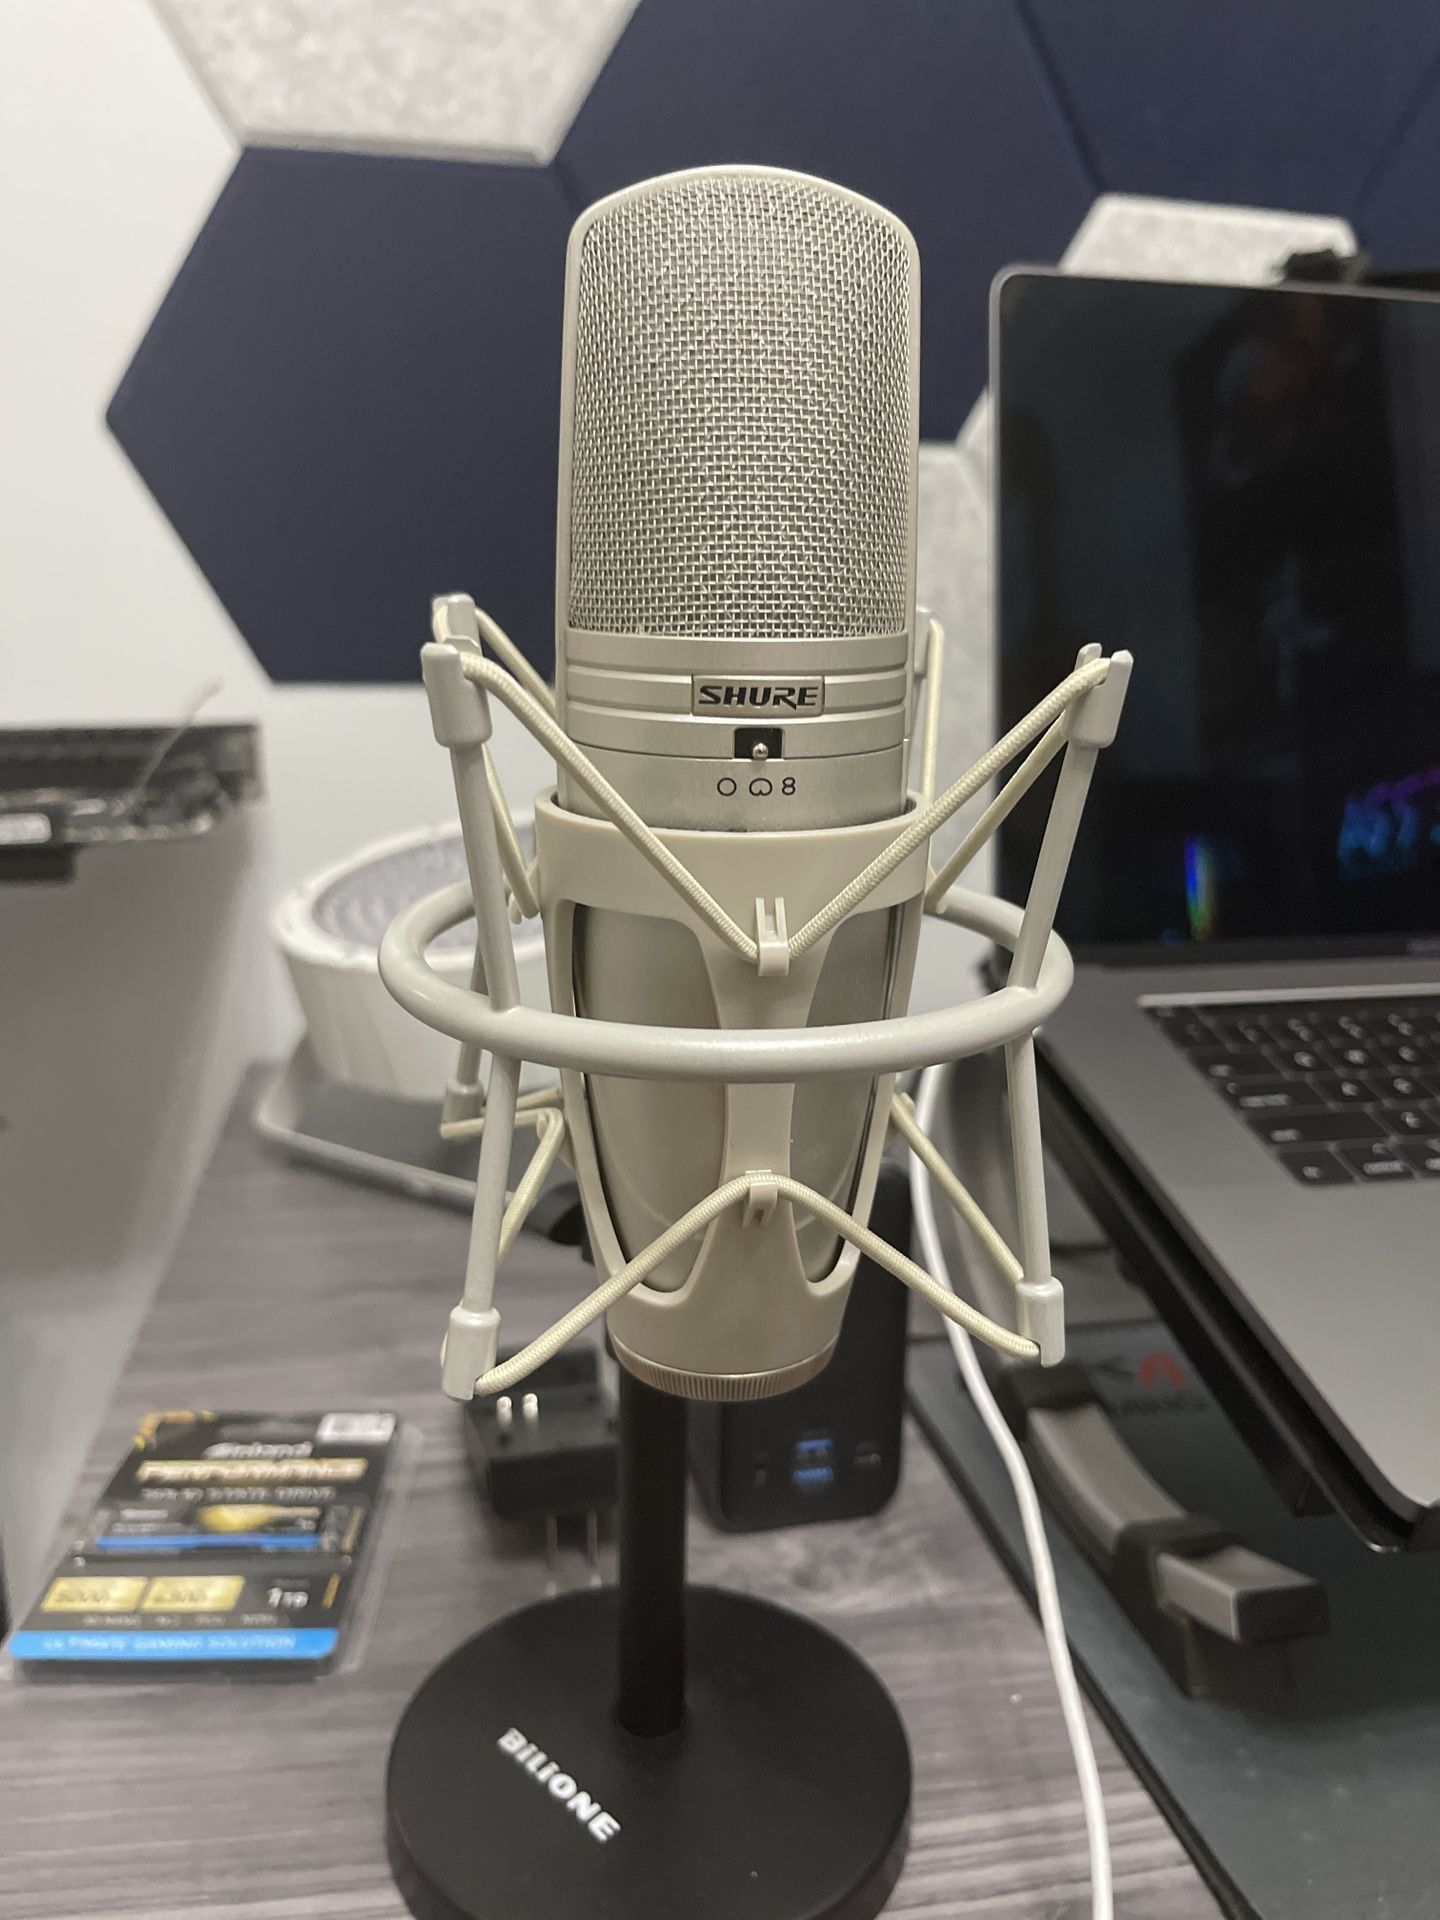 SHURE KSM44A Professional Studio mic!